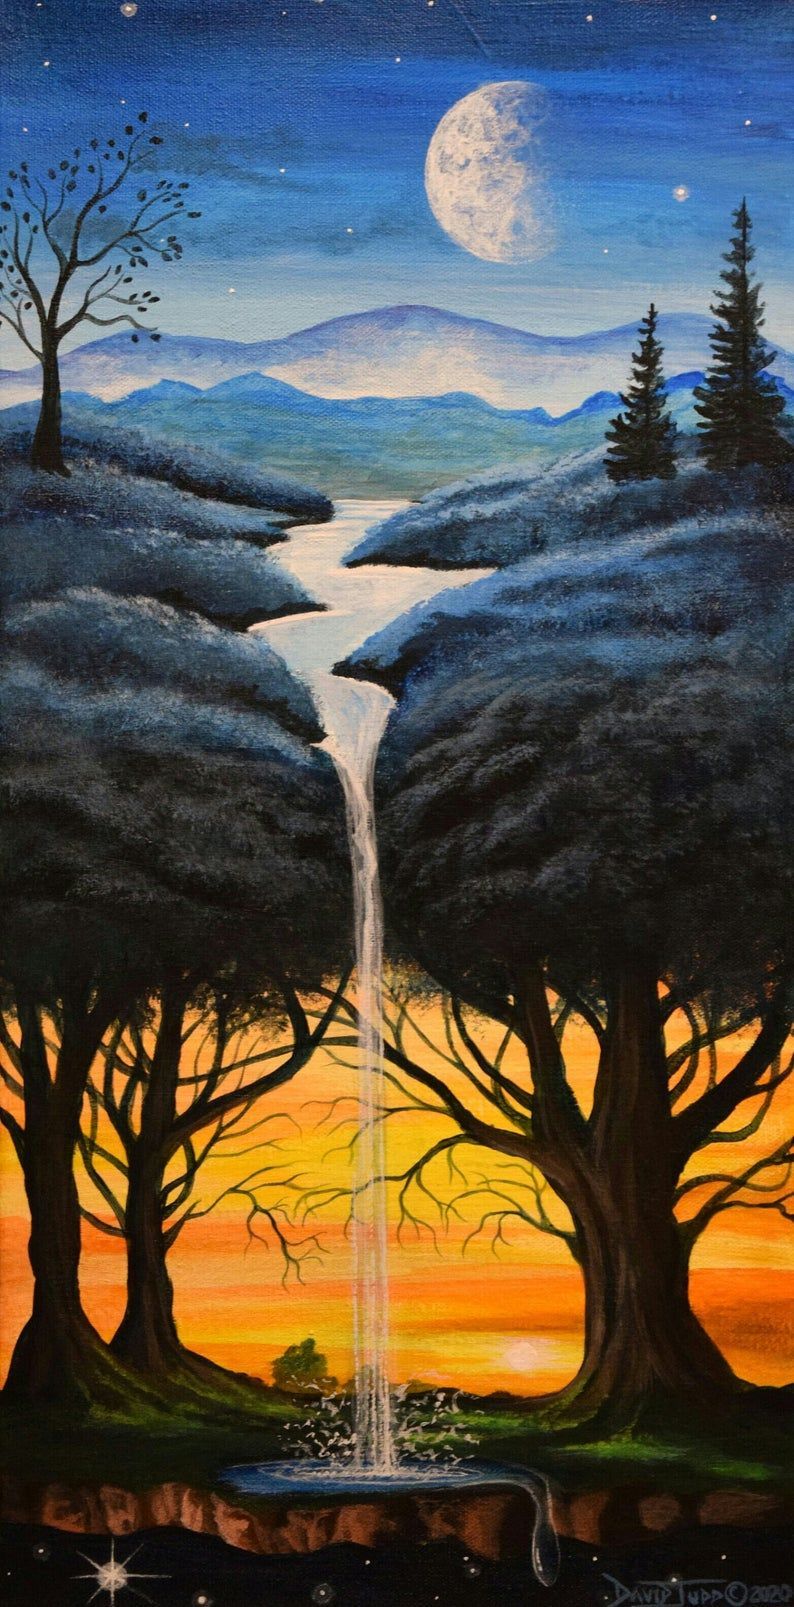 Blue dream tree/surreal acrylic painting/tree art/waterfall tree/fantasy blue tree/dimensonal tree design/blue orange oak trees/night tree -   14 beauty Art moon ideas